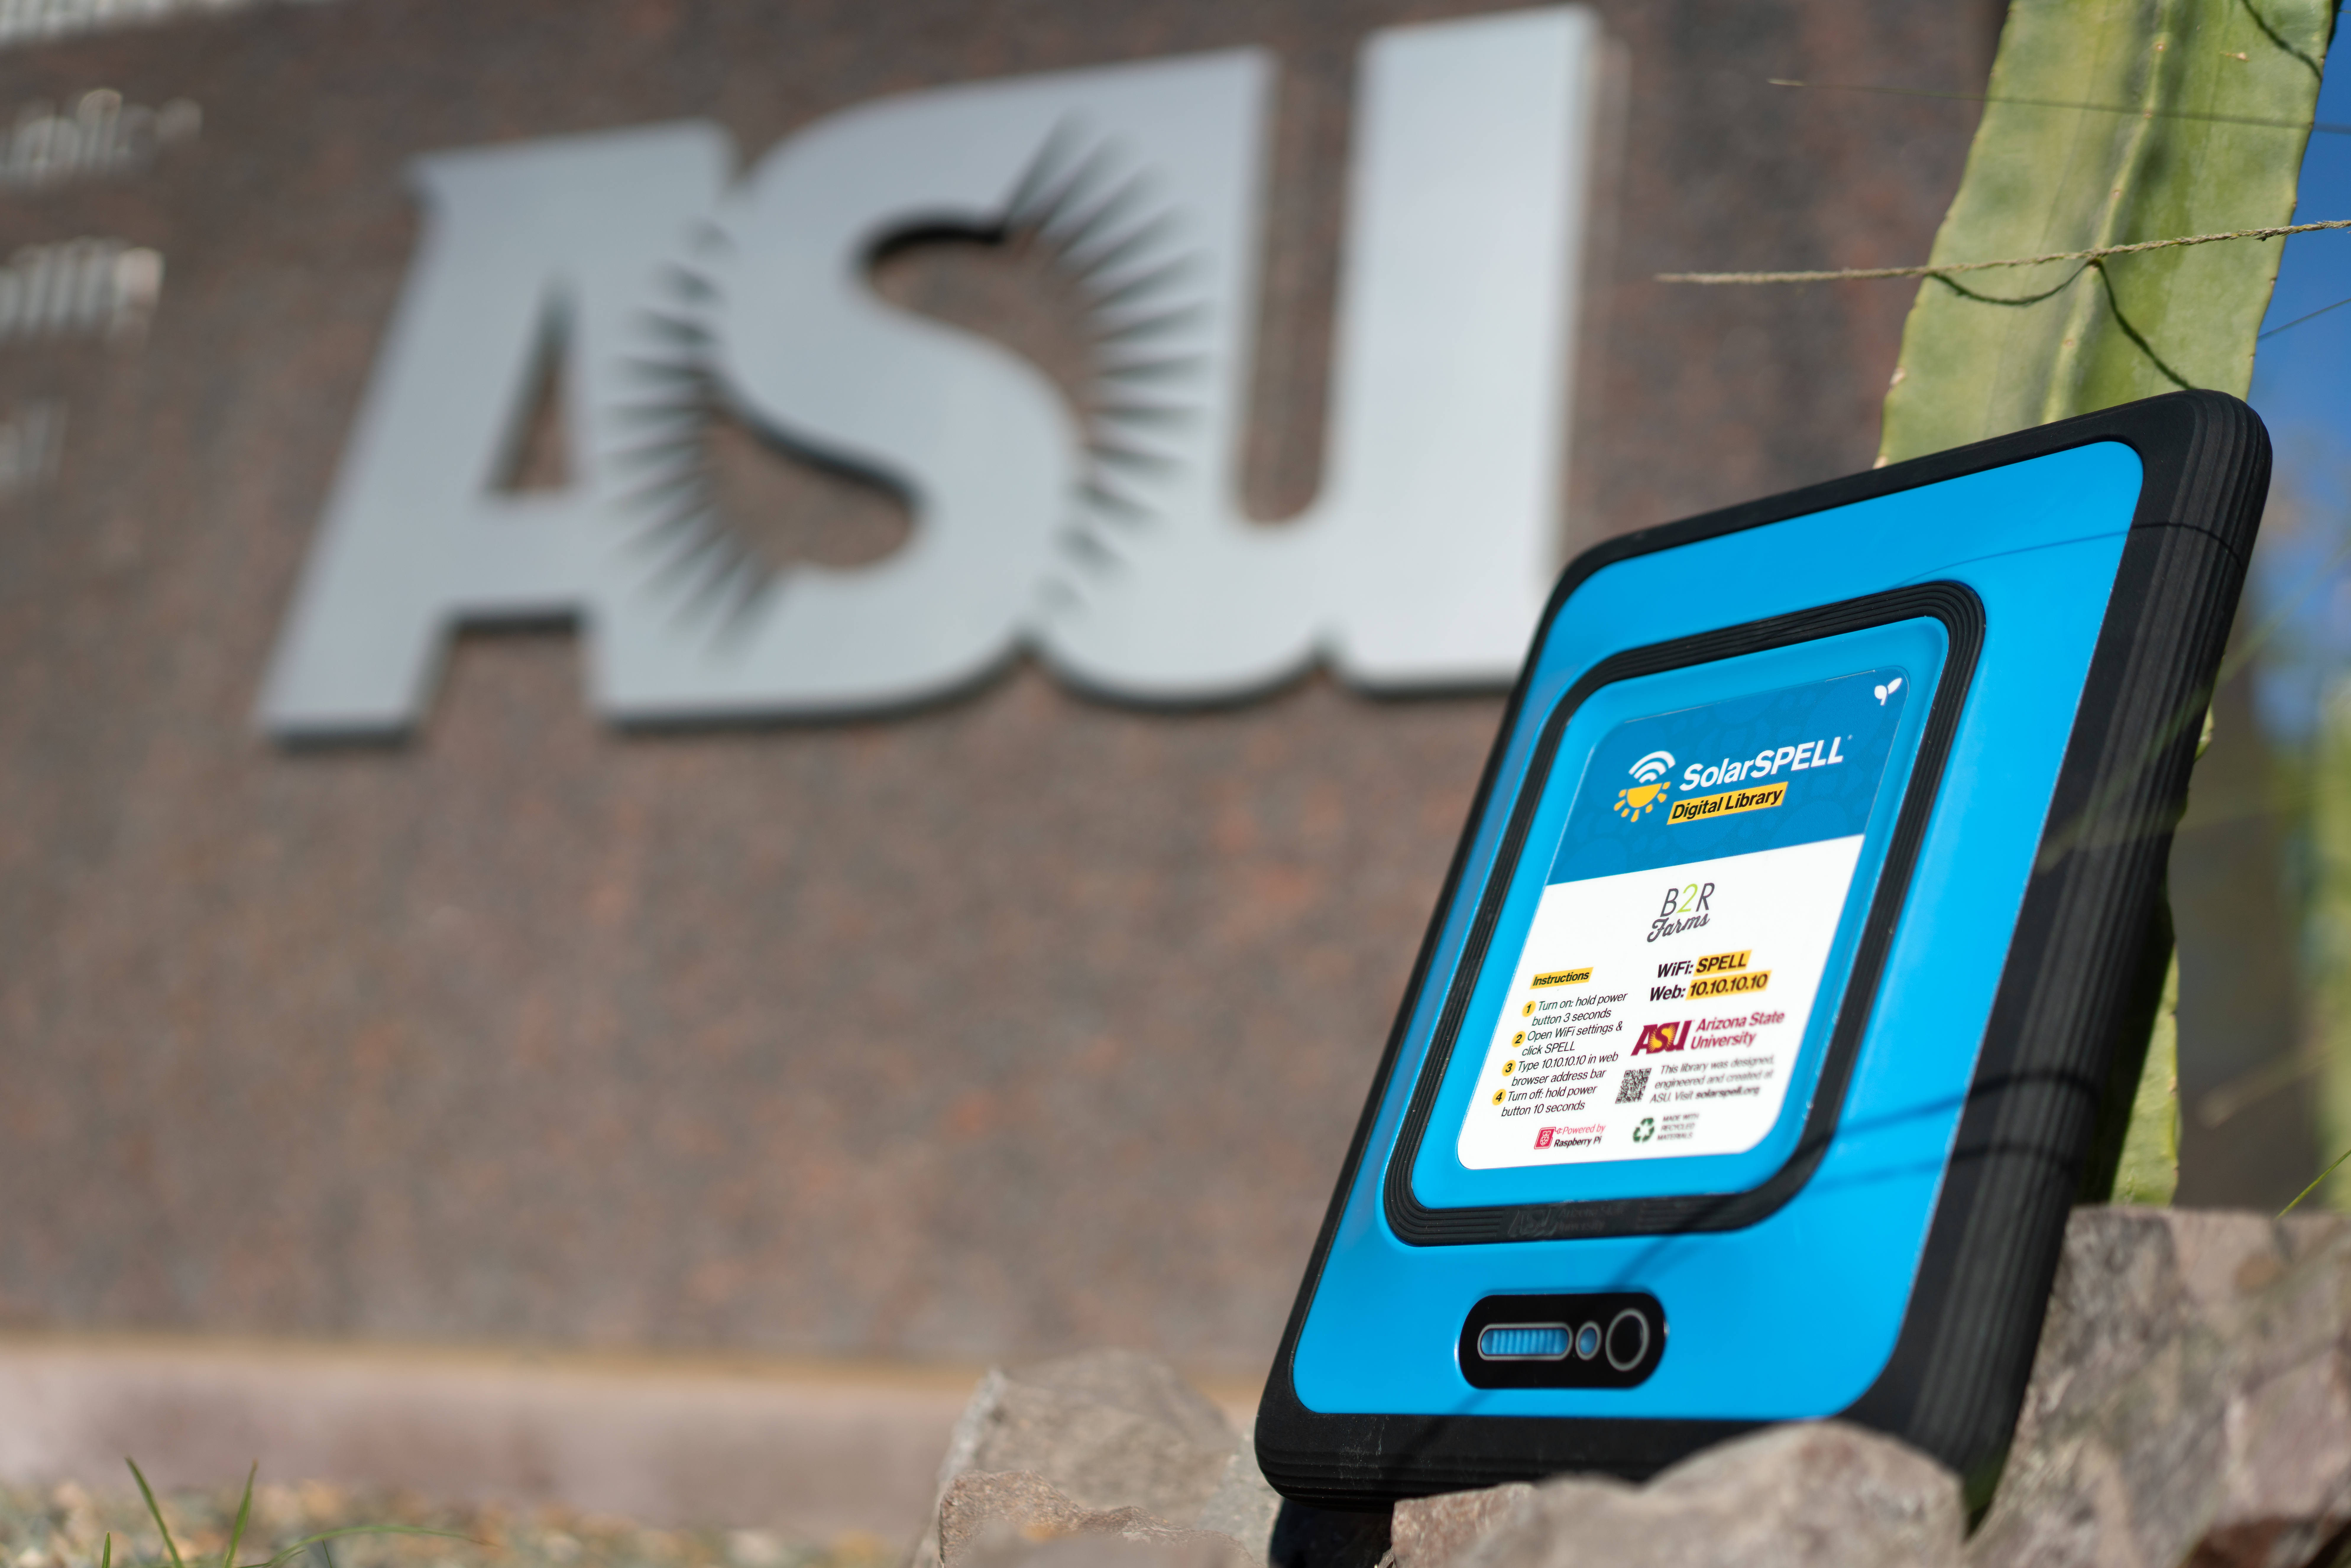 Announcing ASU SolarSPELL’s new hardware design!